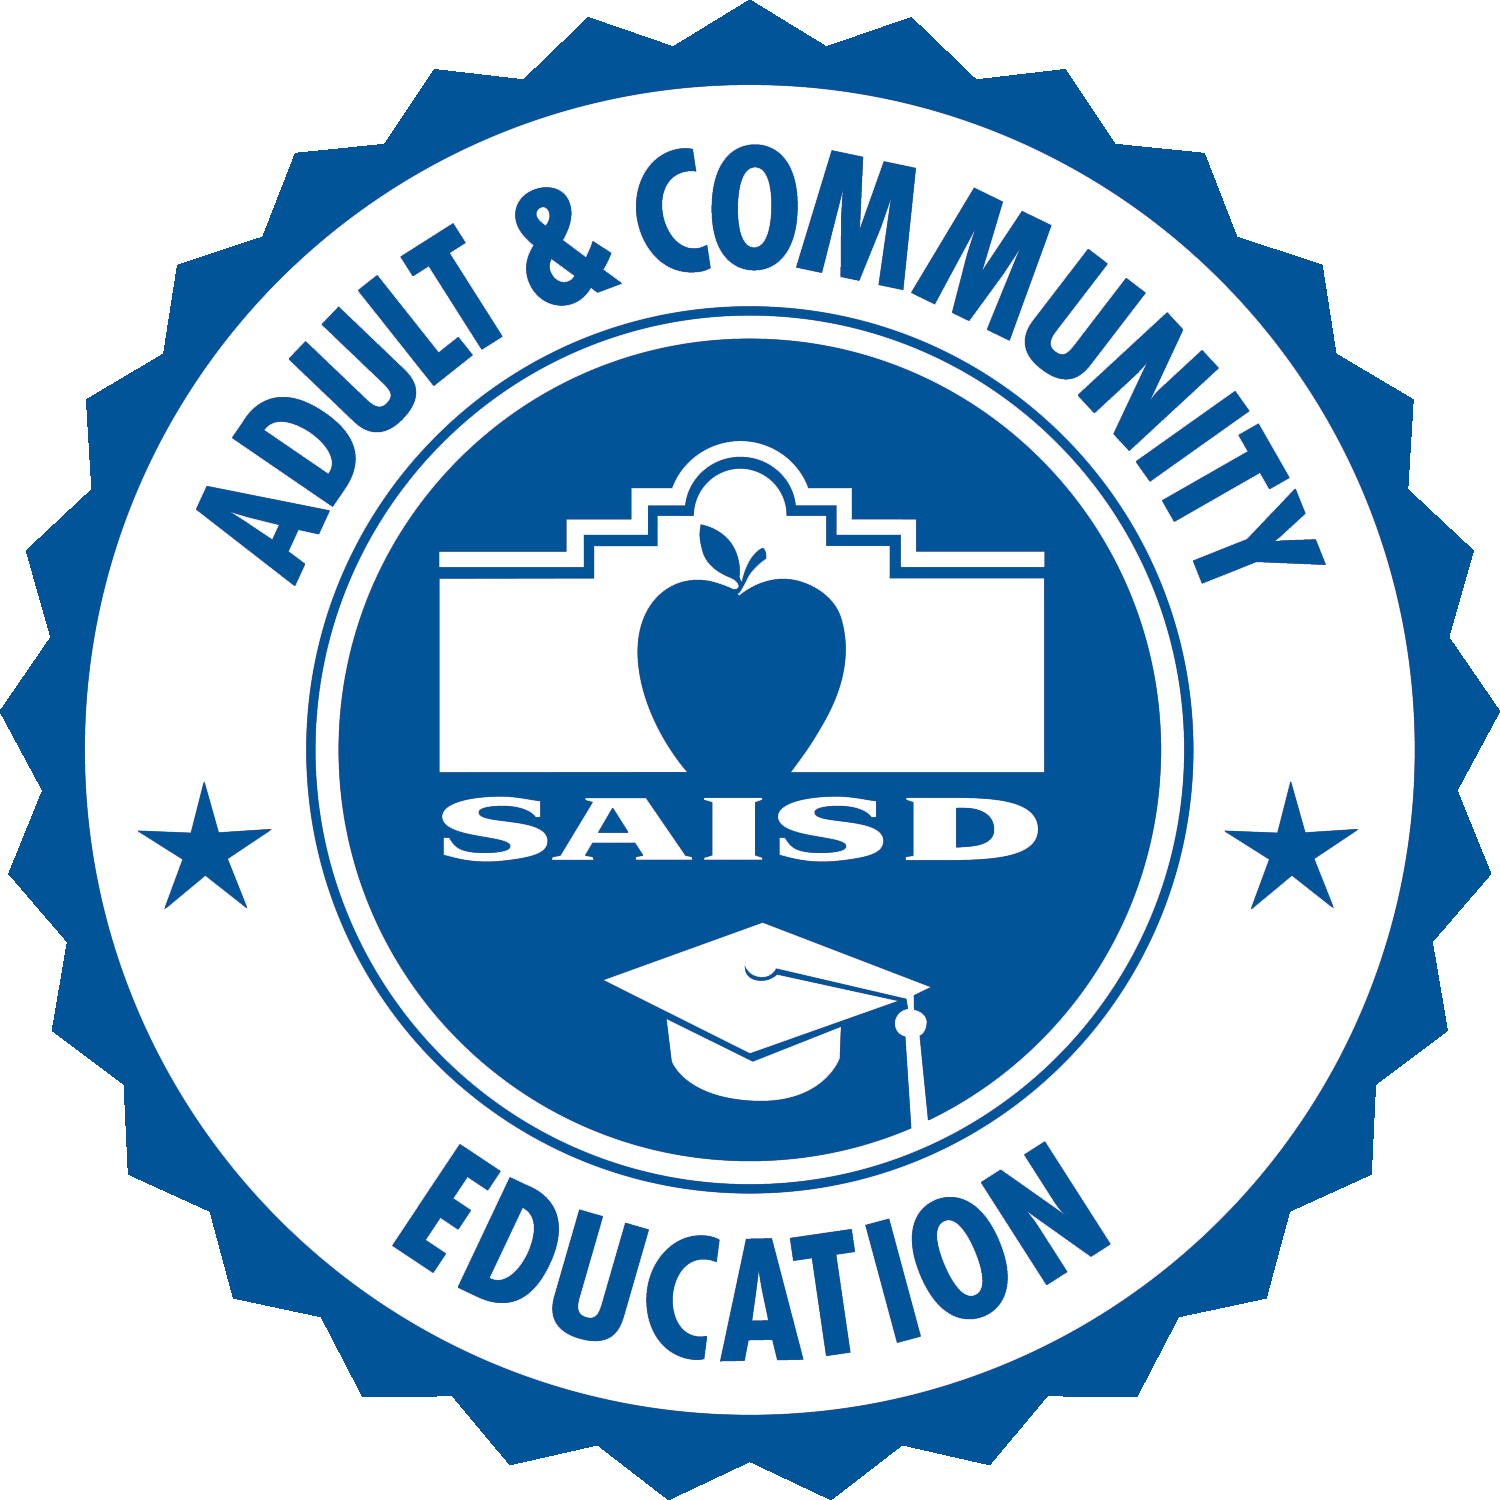 Adult Ed logo